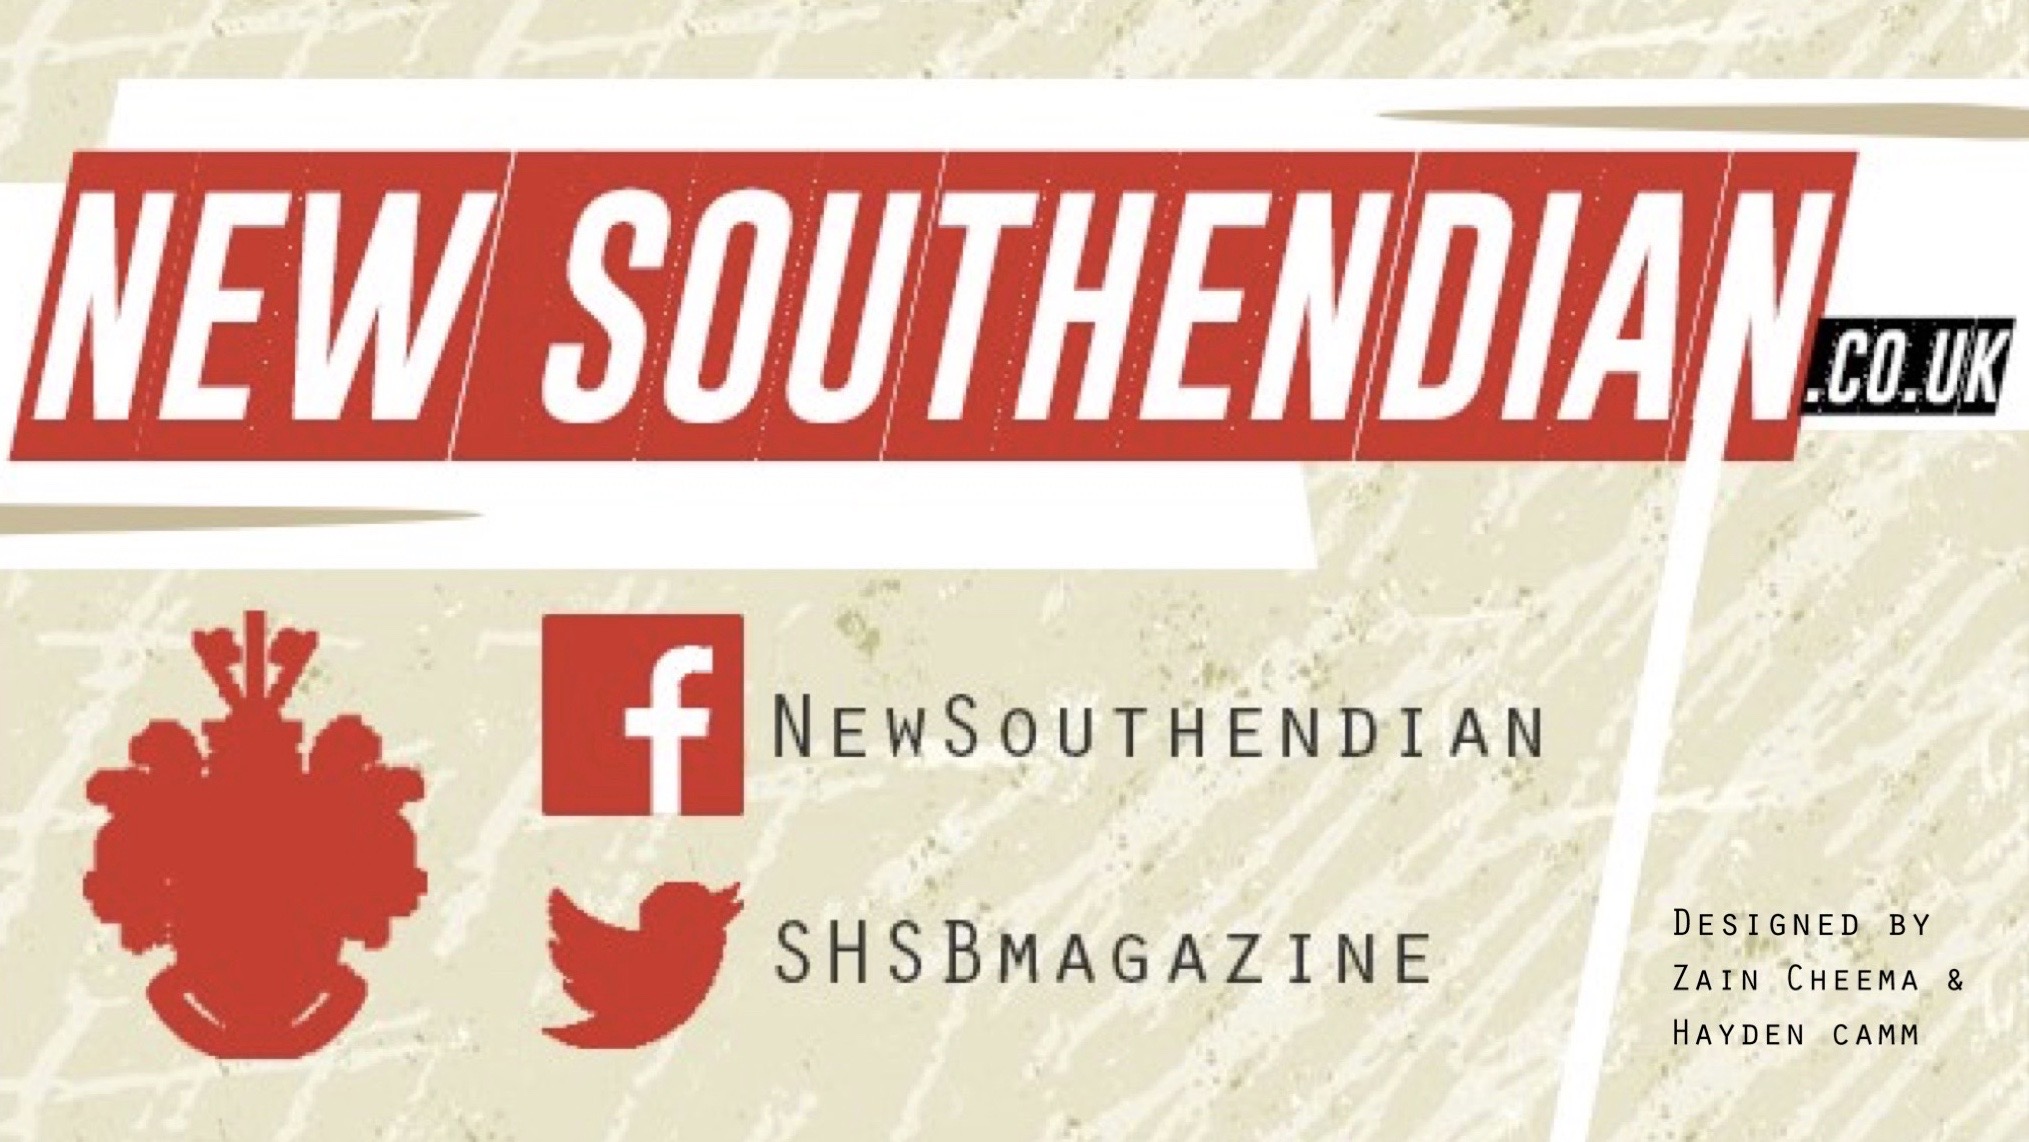 The New Southendian student publication